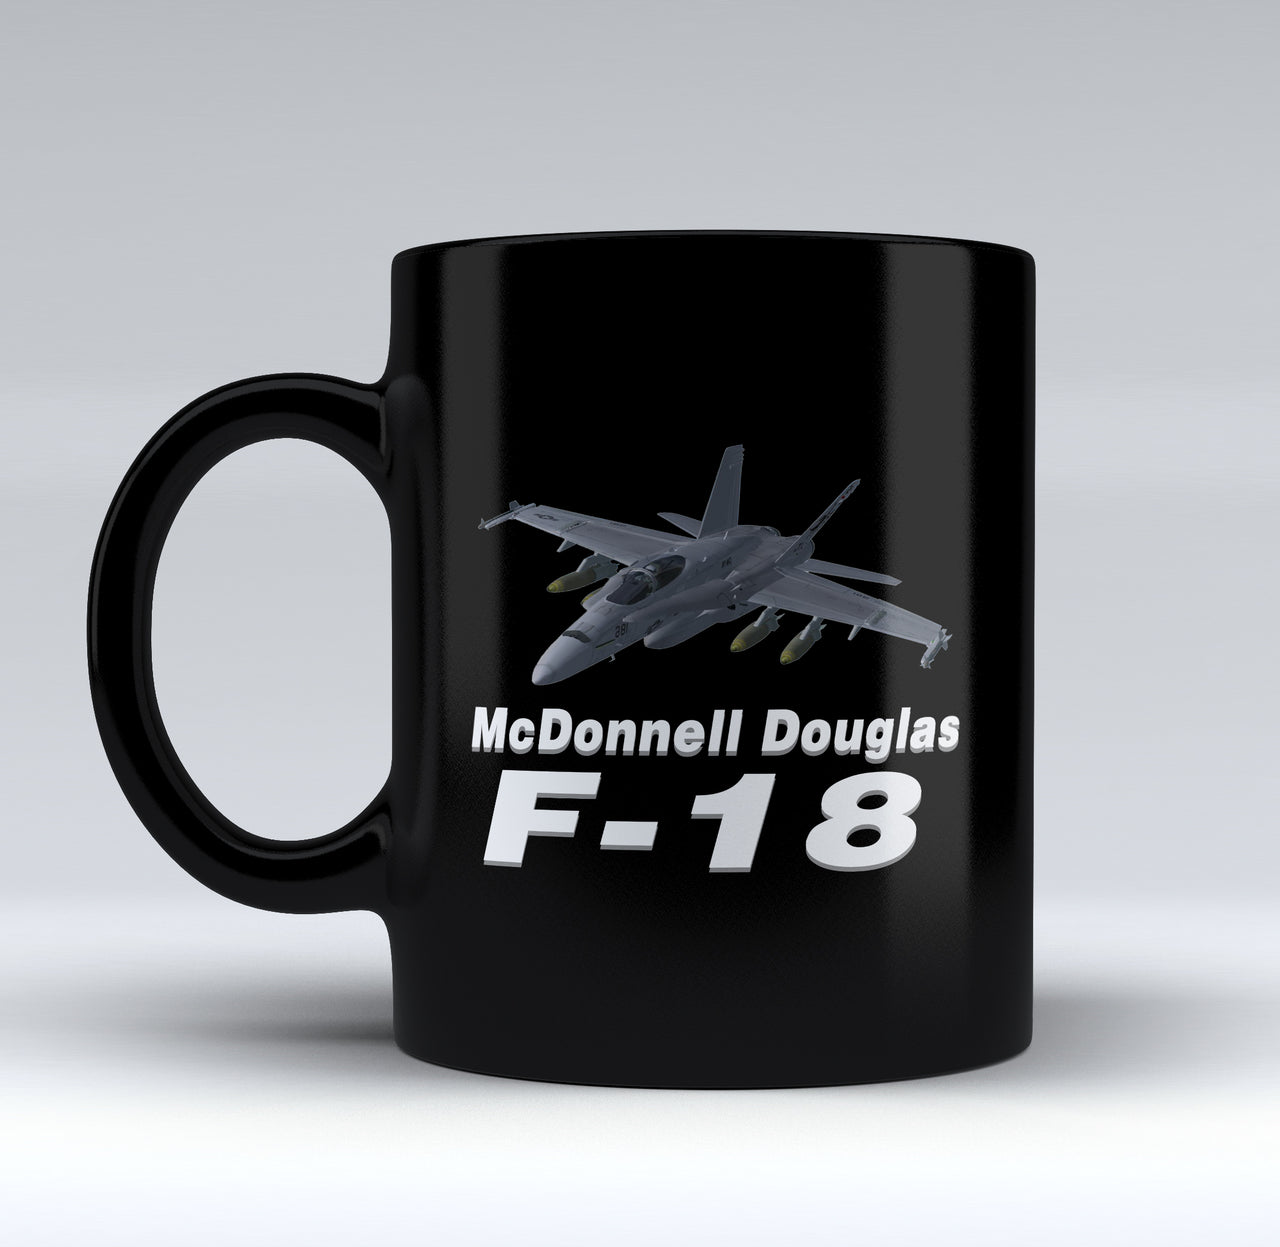 The McDonnell Douglas F18 Designed Black Mugs